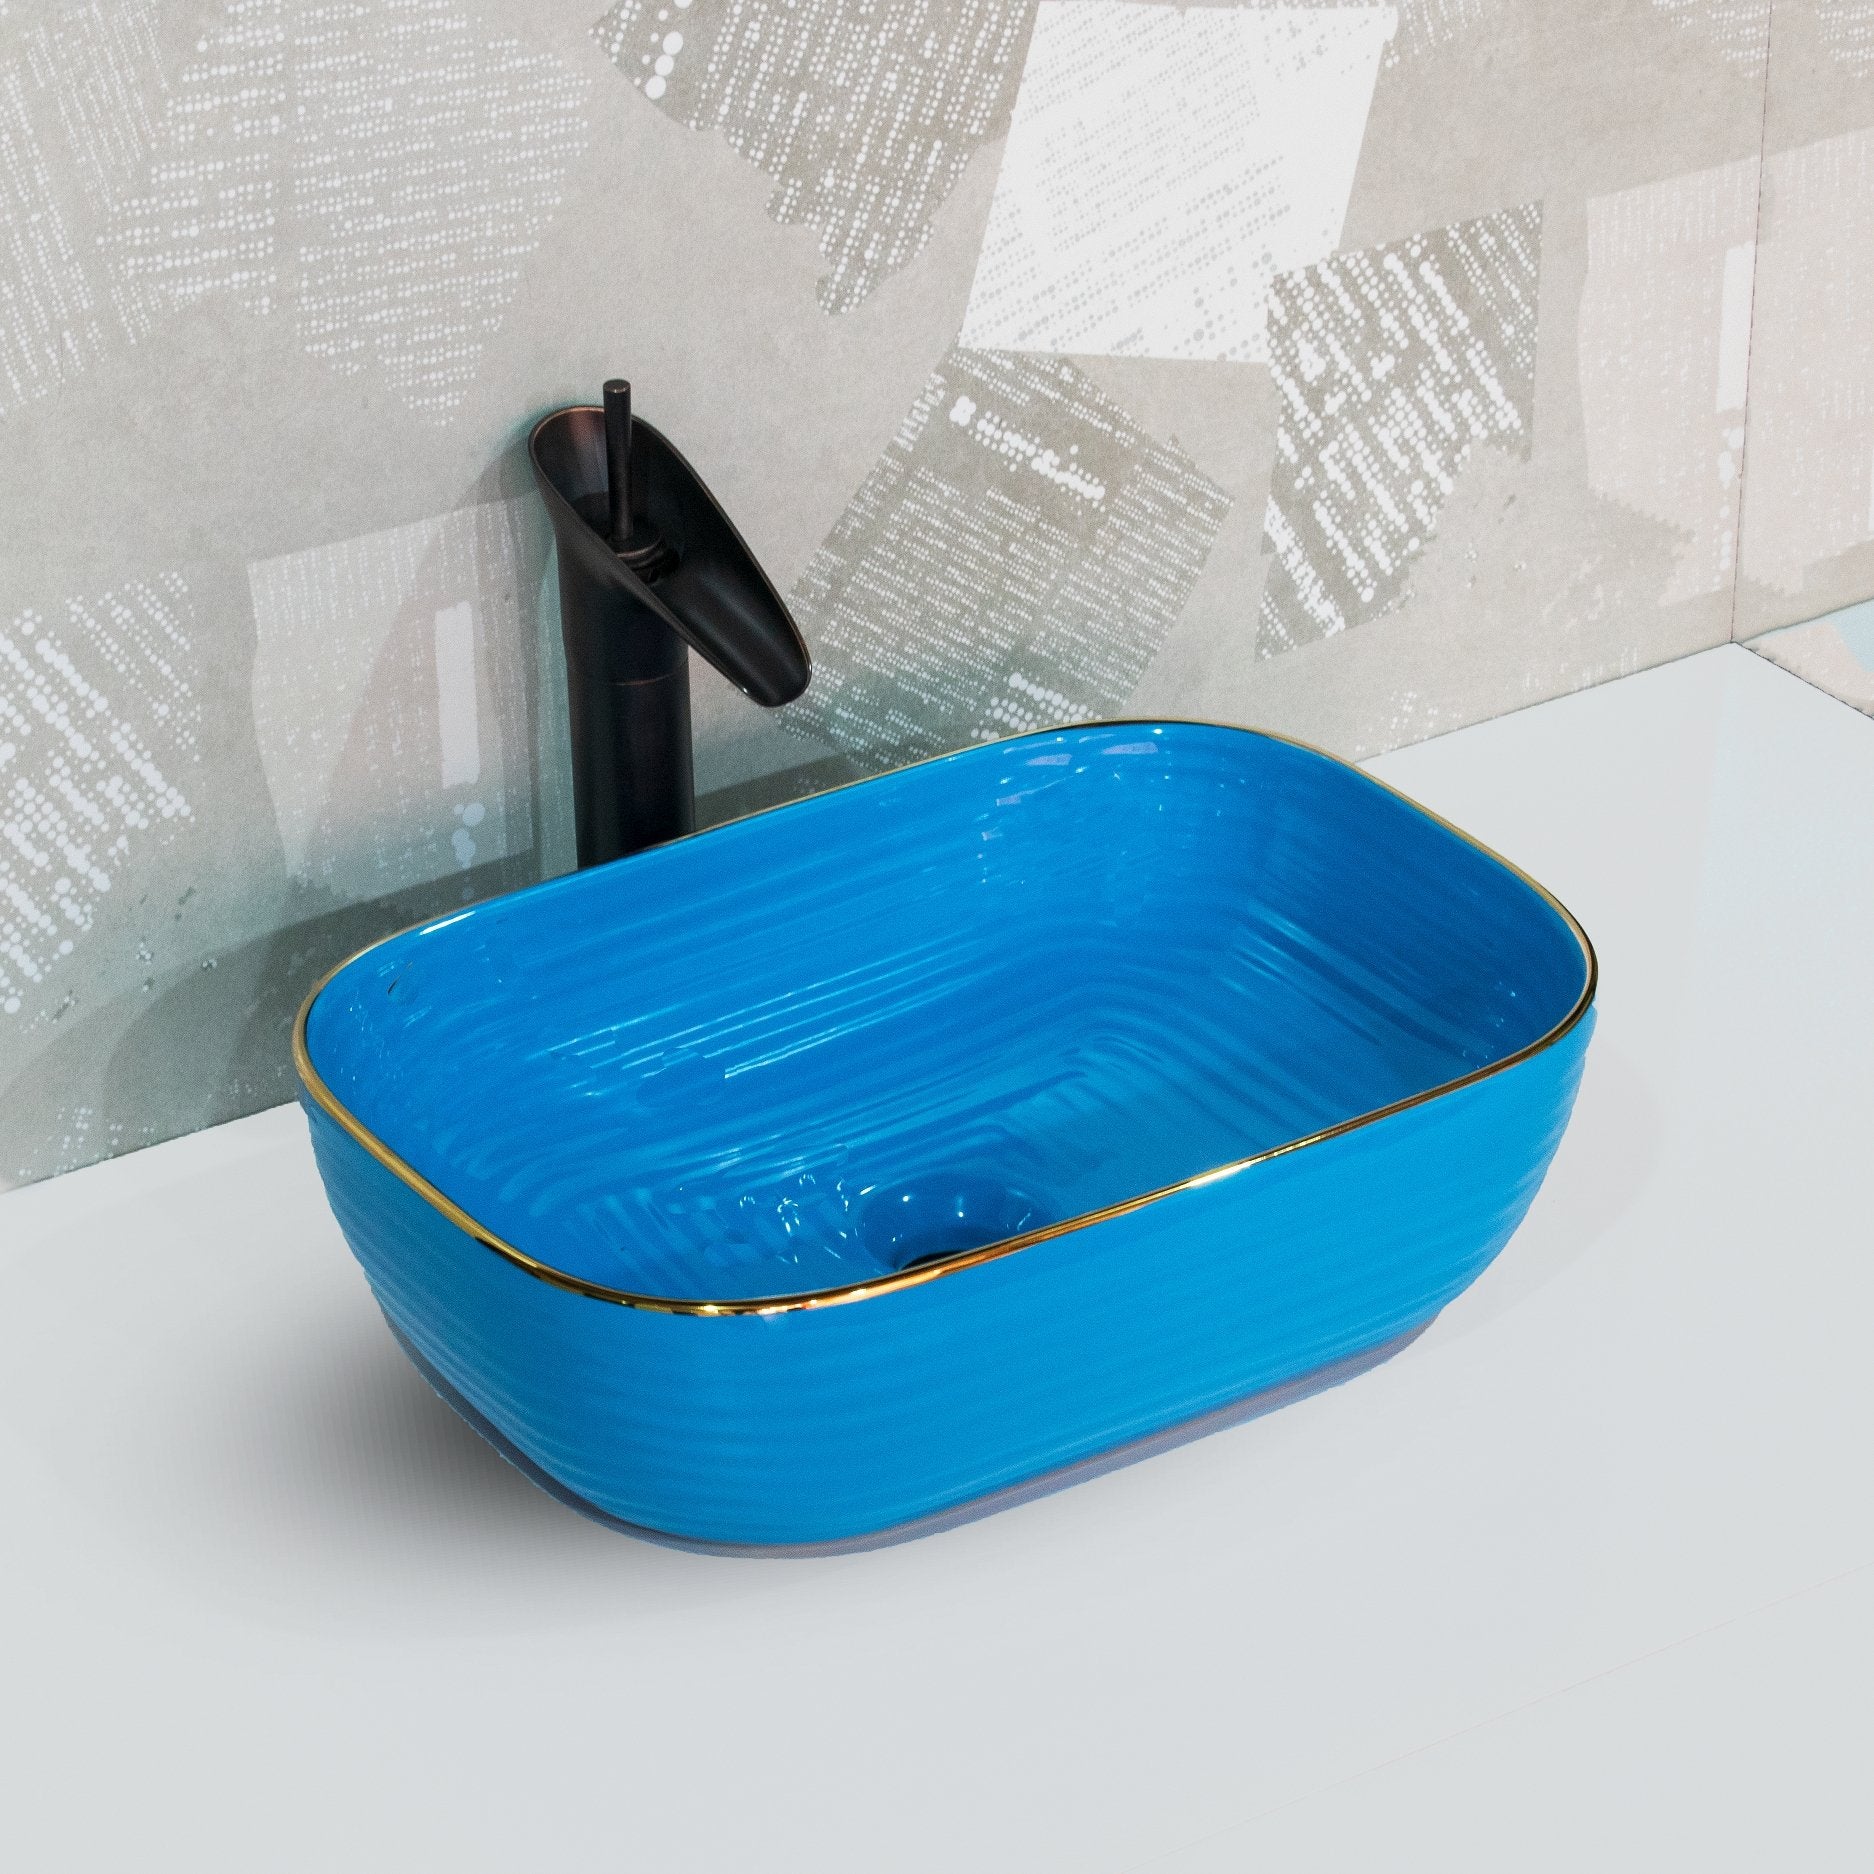 InArt Rectangle Blue Color Marble Bathroom Ceramic Vessel Sink Art Basin 45.5 x 32 CM - InArt-Studio-USA